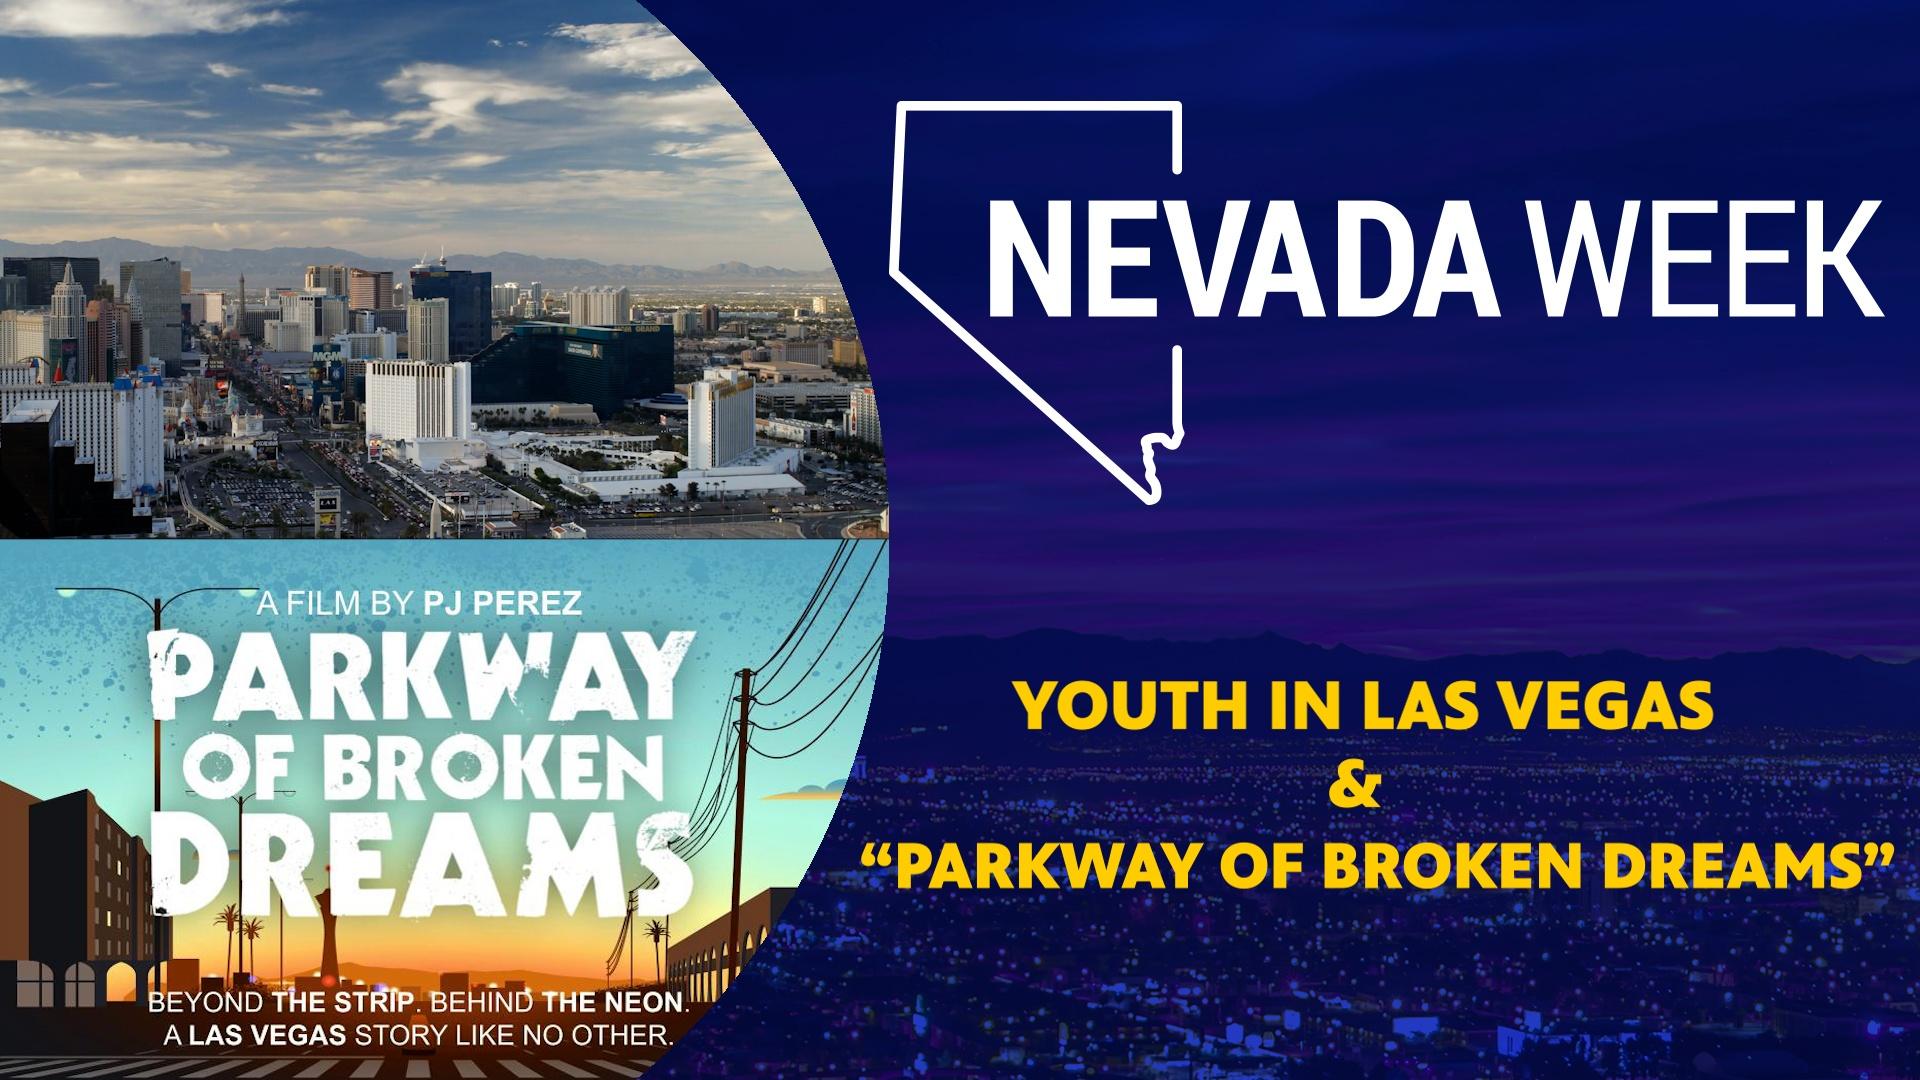 Youth in Las Vegas and “Parkway of Broken Dreams”